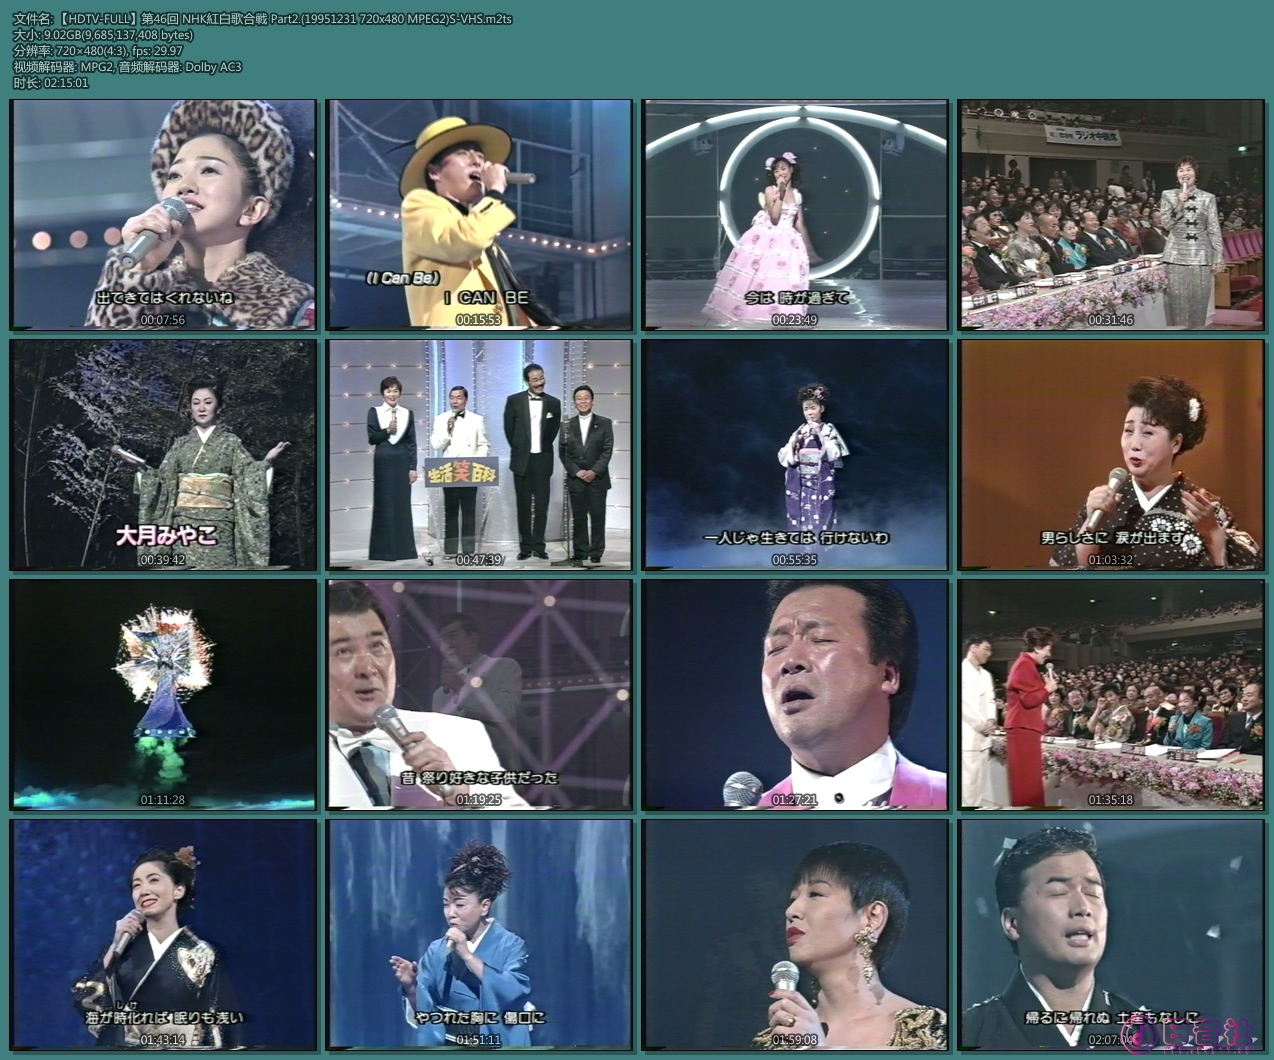 【HDTV-FULL】第46回 NHK紅白歌合戦 Part2.(19951231 720x480 MPEG2)S-VHS.m2ts.jpg